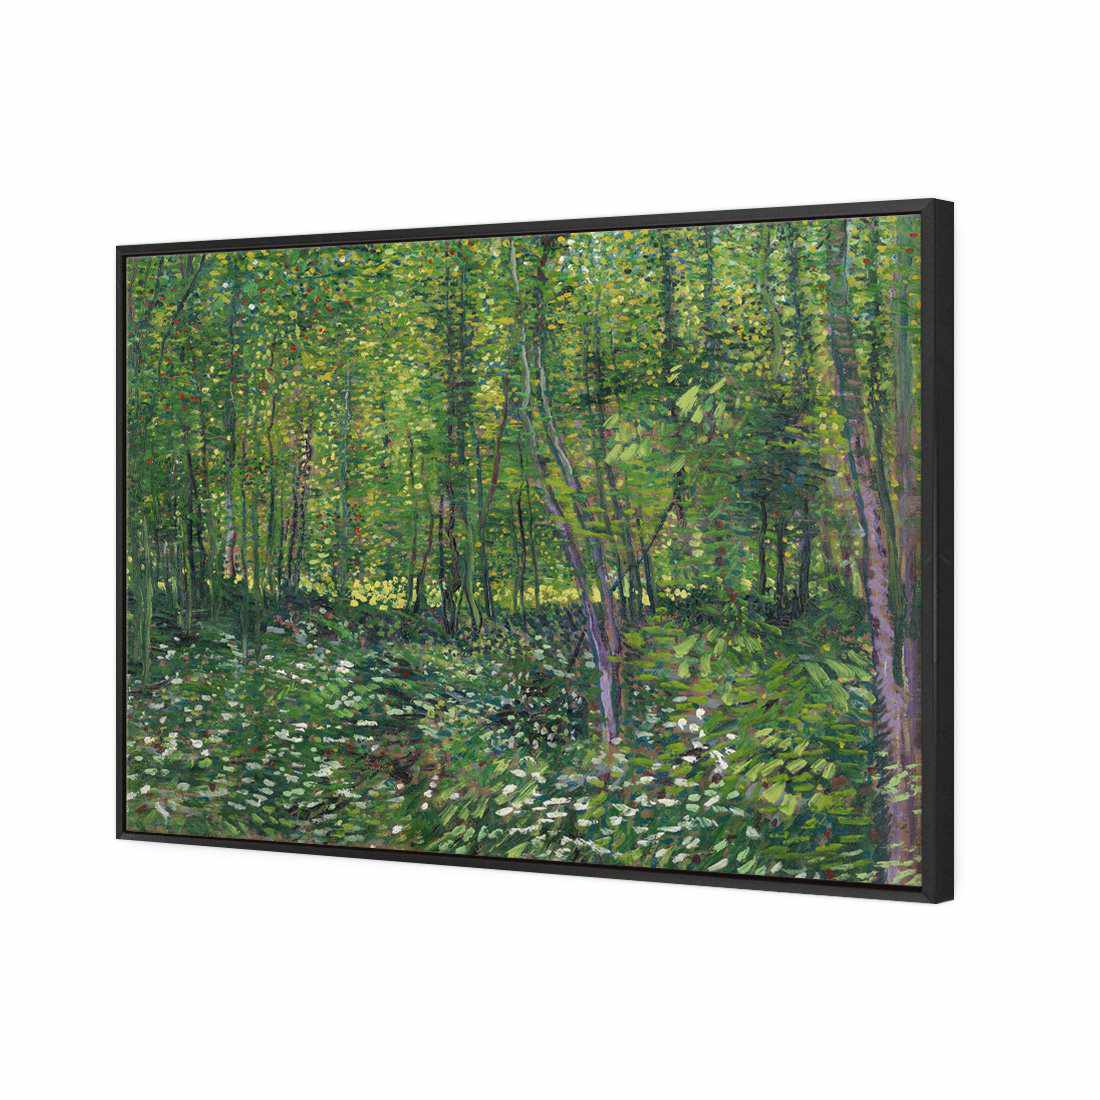 Trees And Undergrowth - Van Gogh Canvas Art-Canvas-Wall Art Designs-45x30cm-Canvas - Black Frame-Wall Art Designs